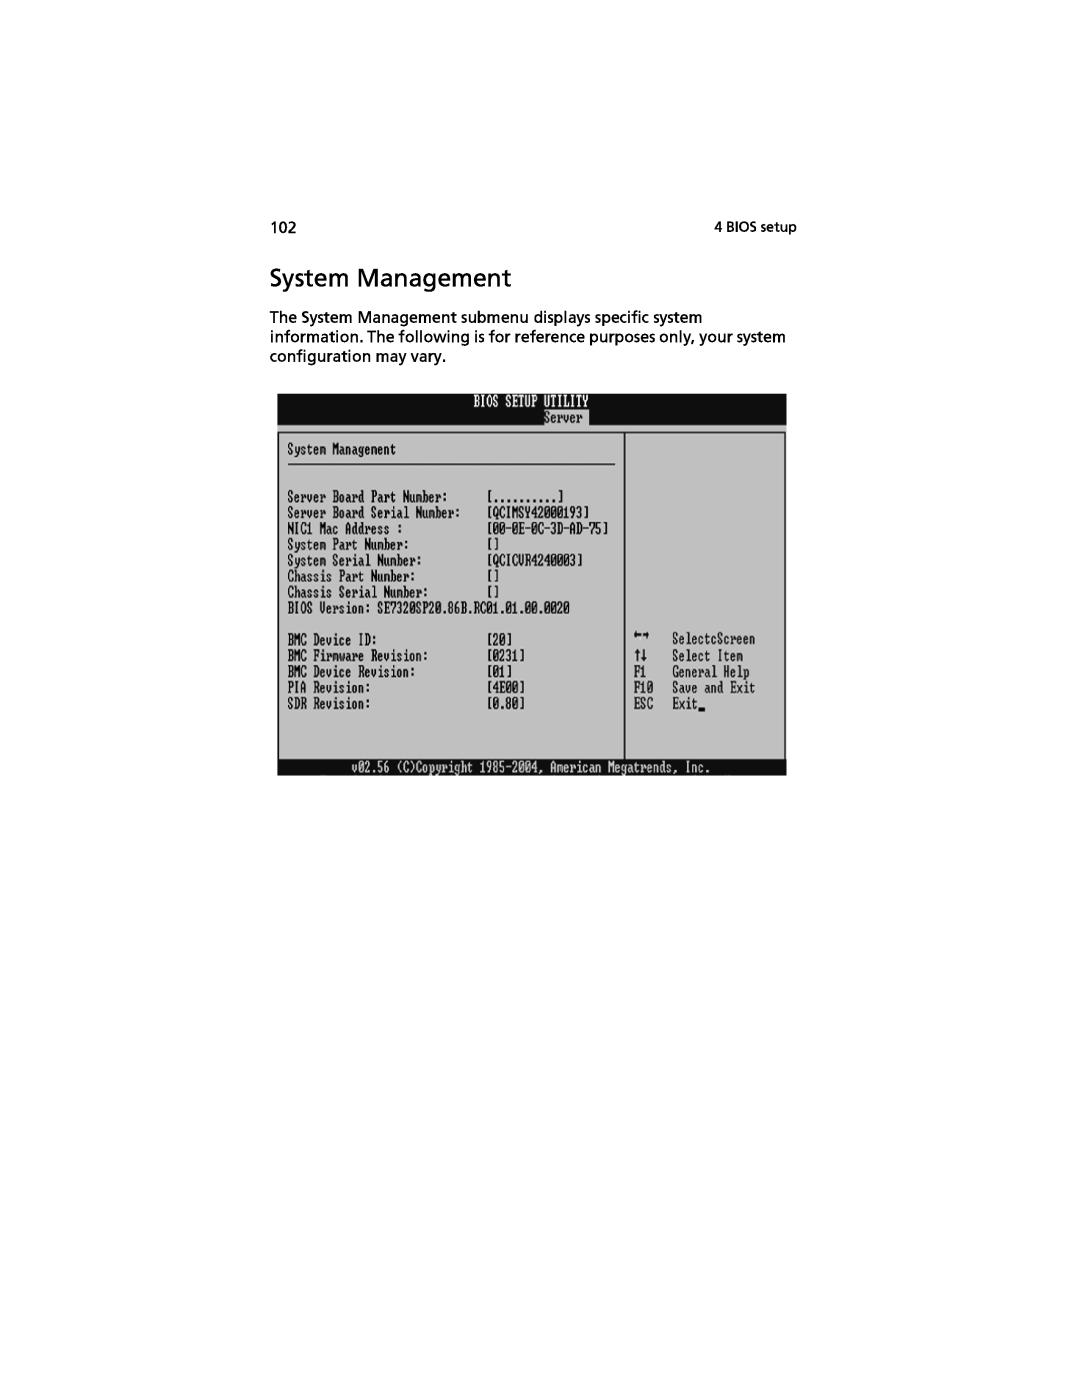 Acer G520 series manual System Management, BIOS setup 